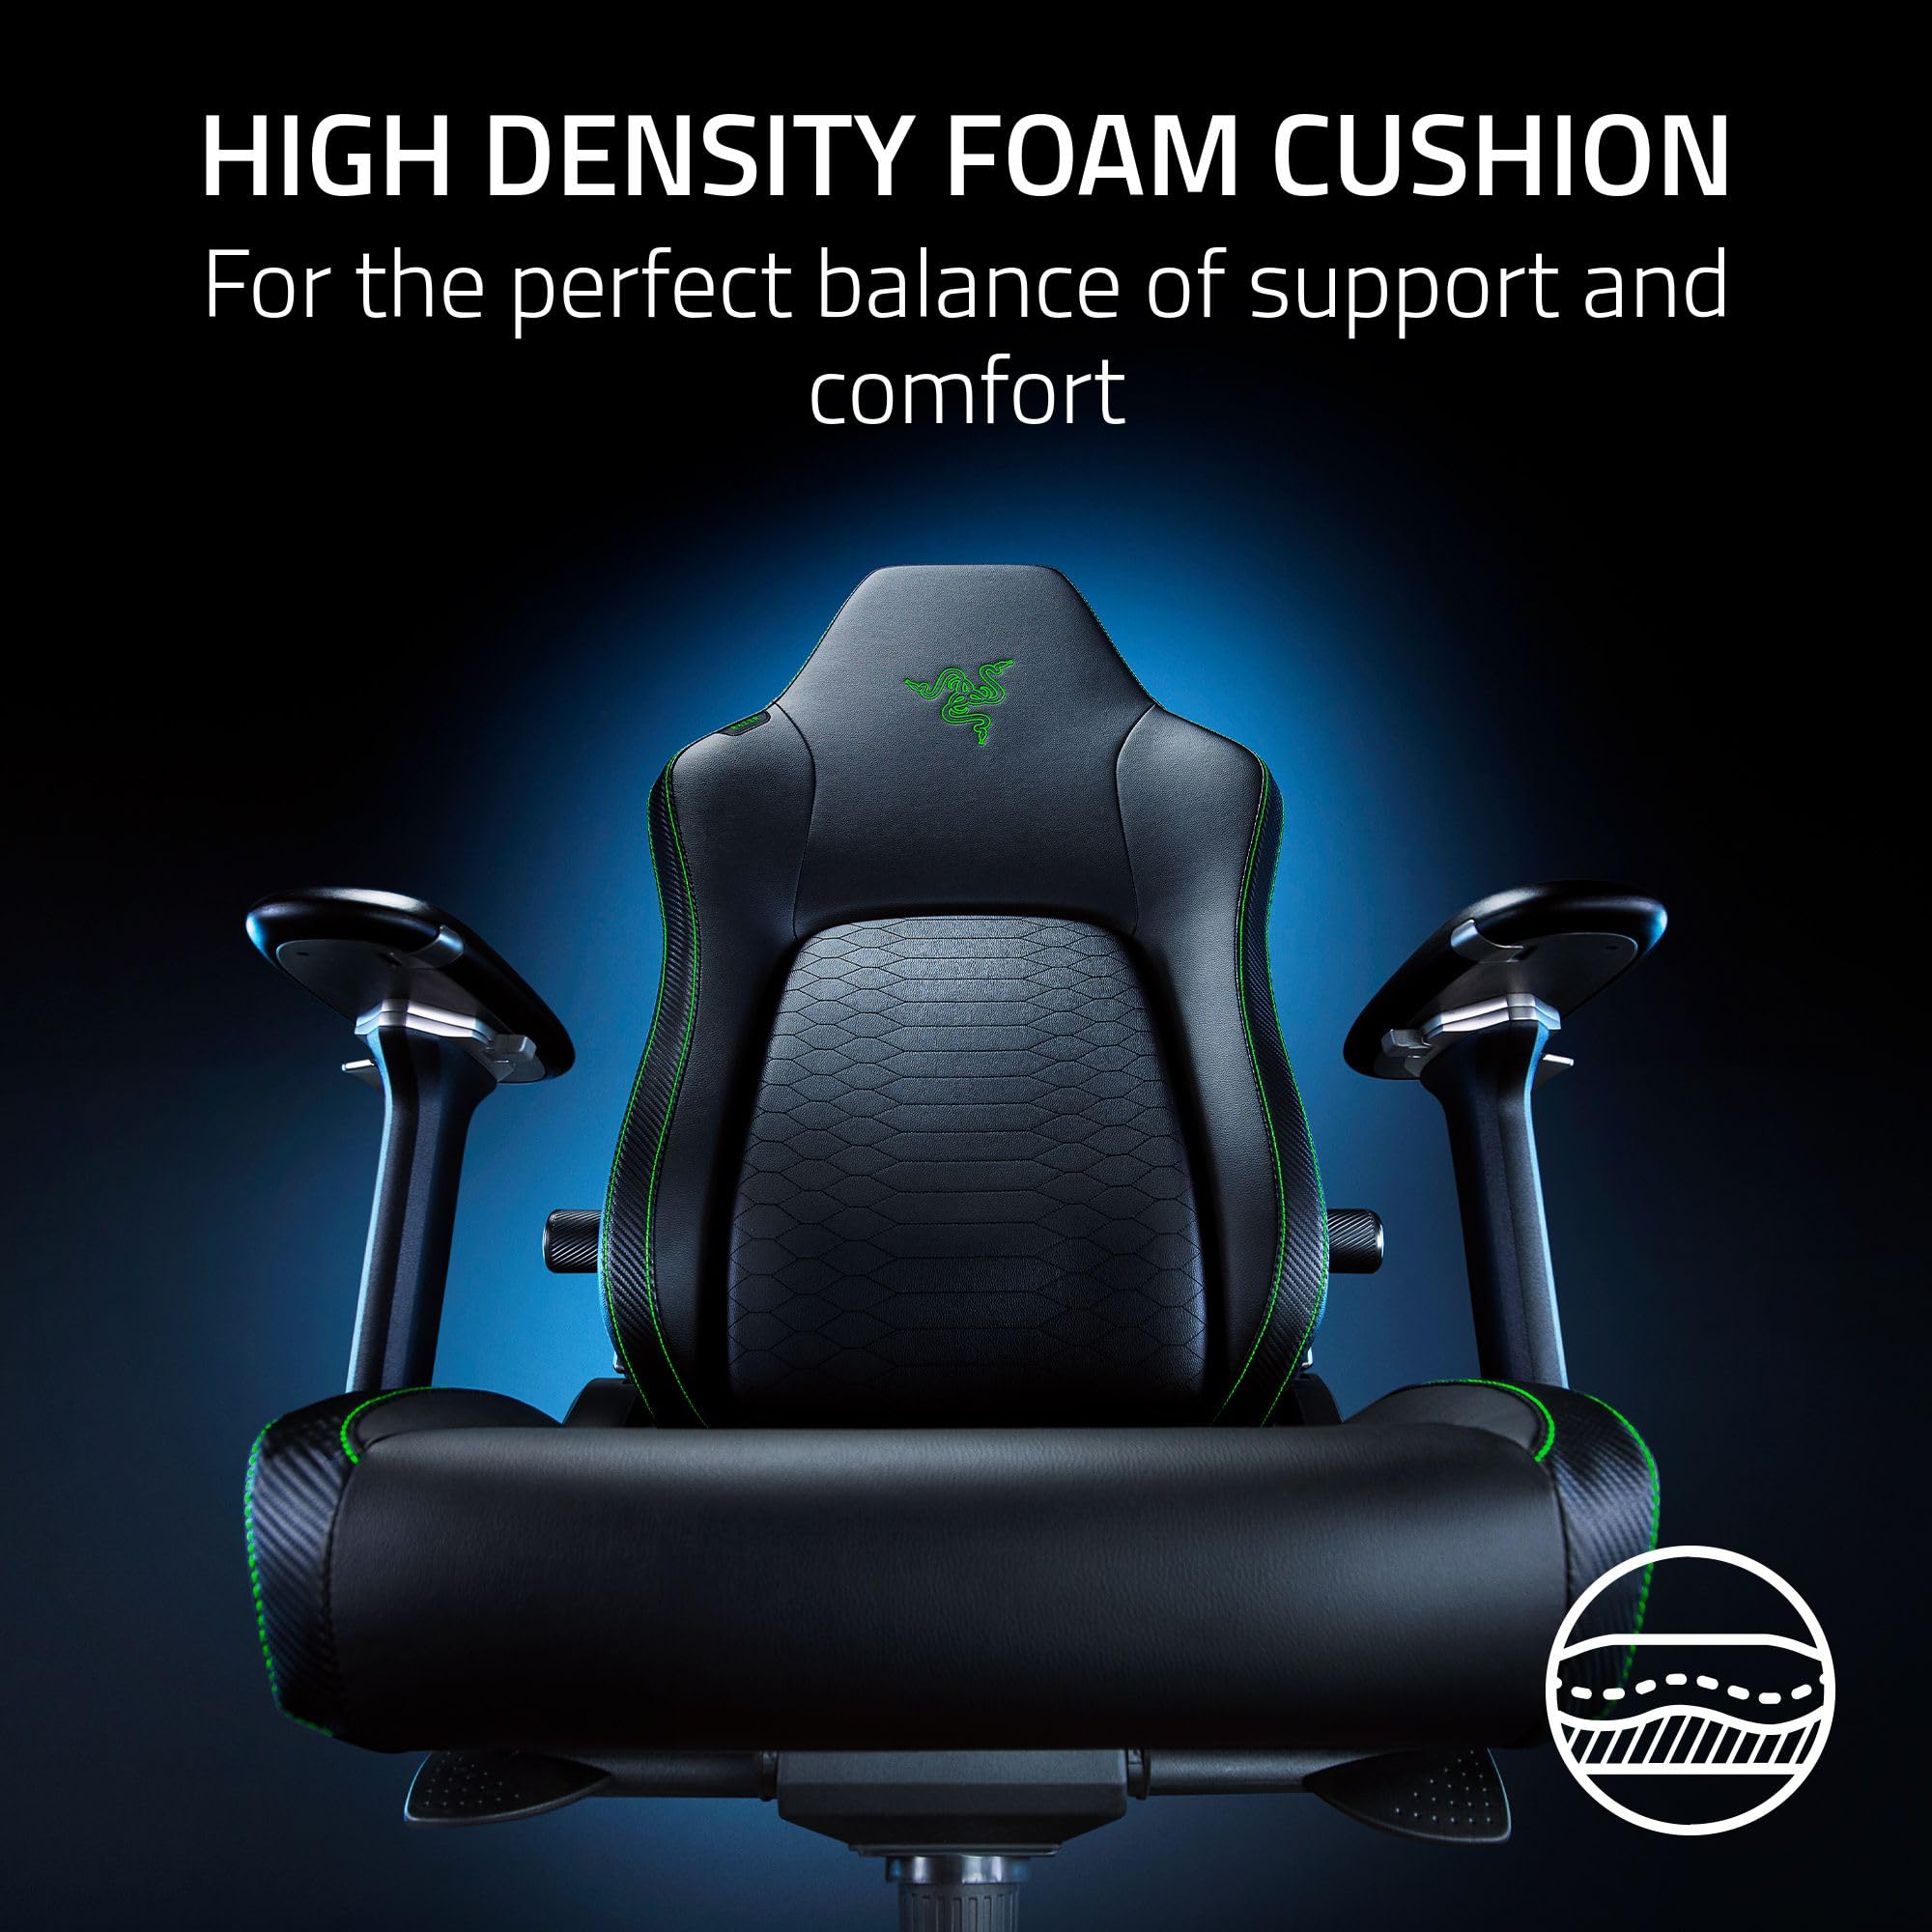 Razer Iskur V2 Gaming Chair: Adaptive Lumbar Support - Adjustable Lumbar Curve - High Density Foam Cushions - Reactive Seat Tilt &152-degree Recline - 4D Armrests - Synthetic Leather - Black